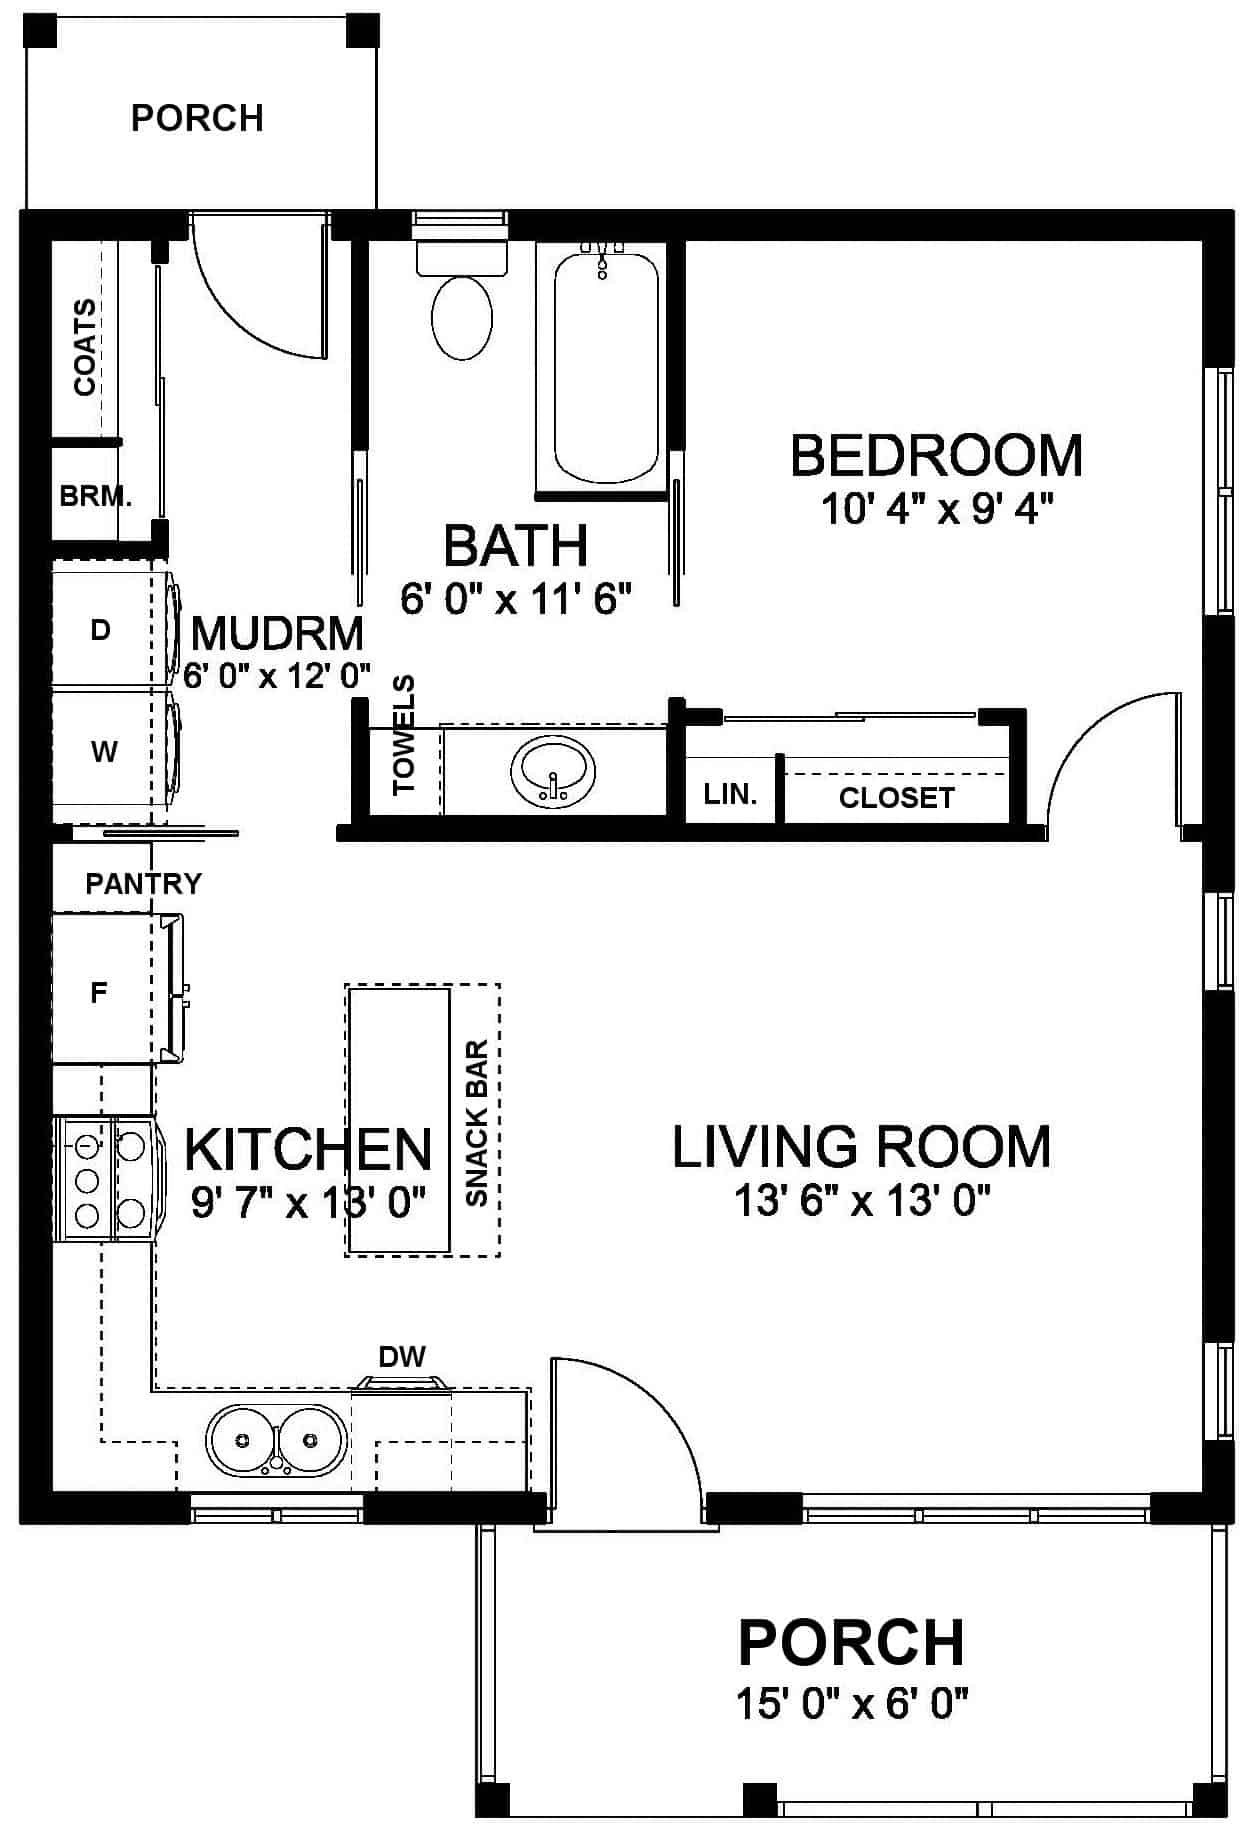 1-Bedroom Tiny Ranch Home - 1 Bath, 624 Sq Ft - Plan #177-1054